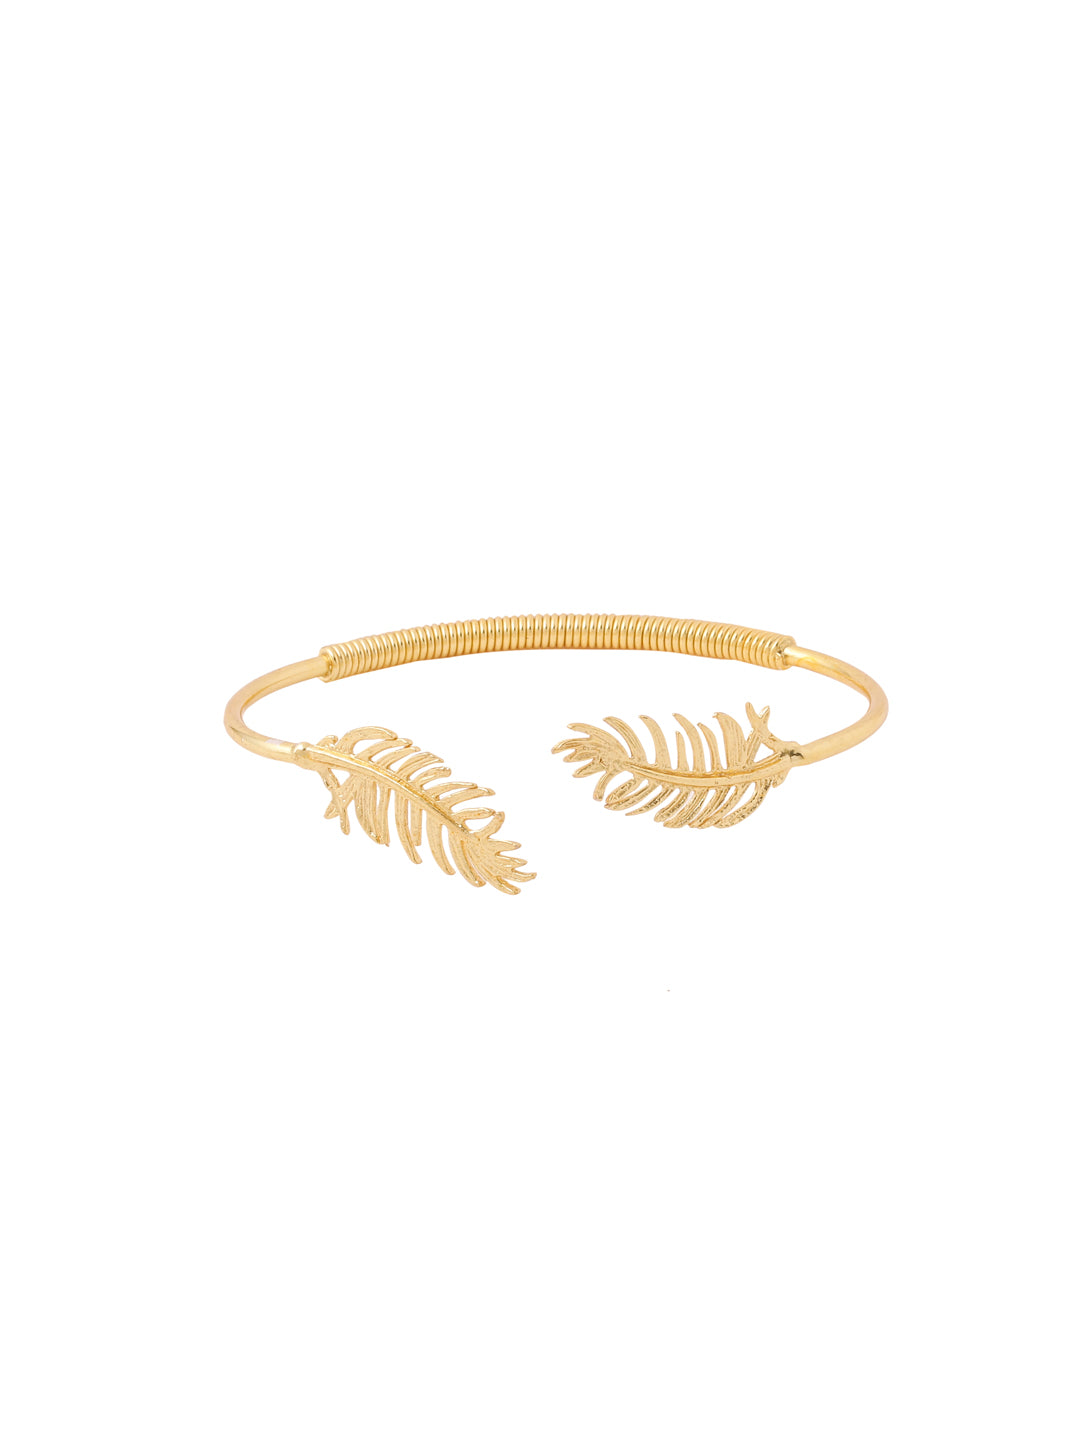 Women's gold plated adjustable Kada bracelet - NVR